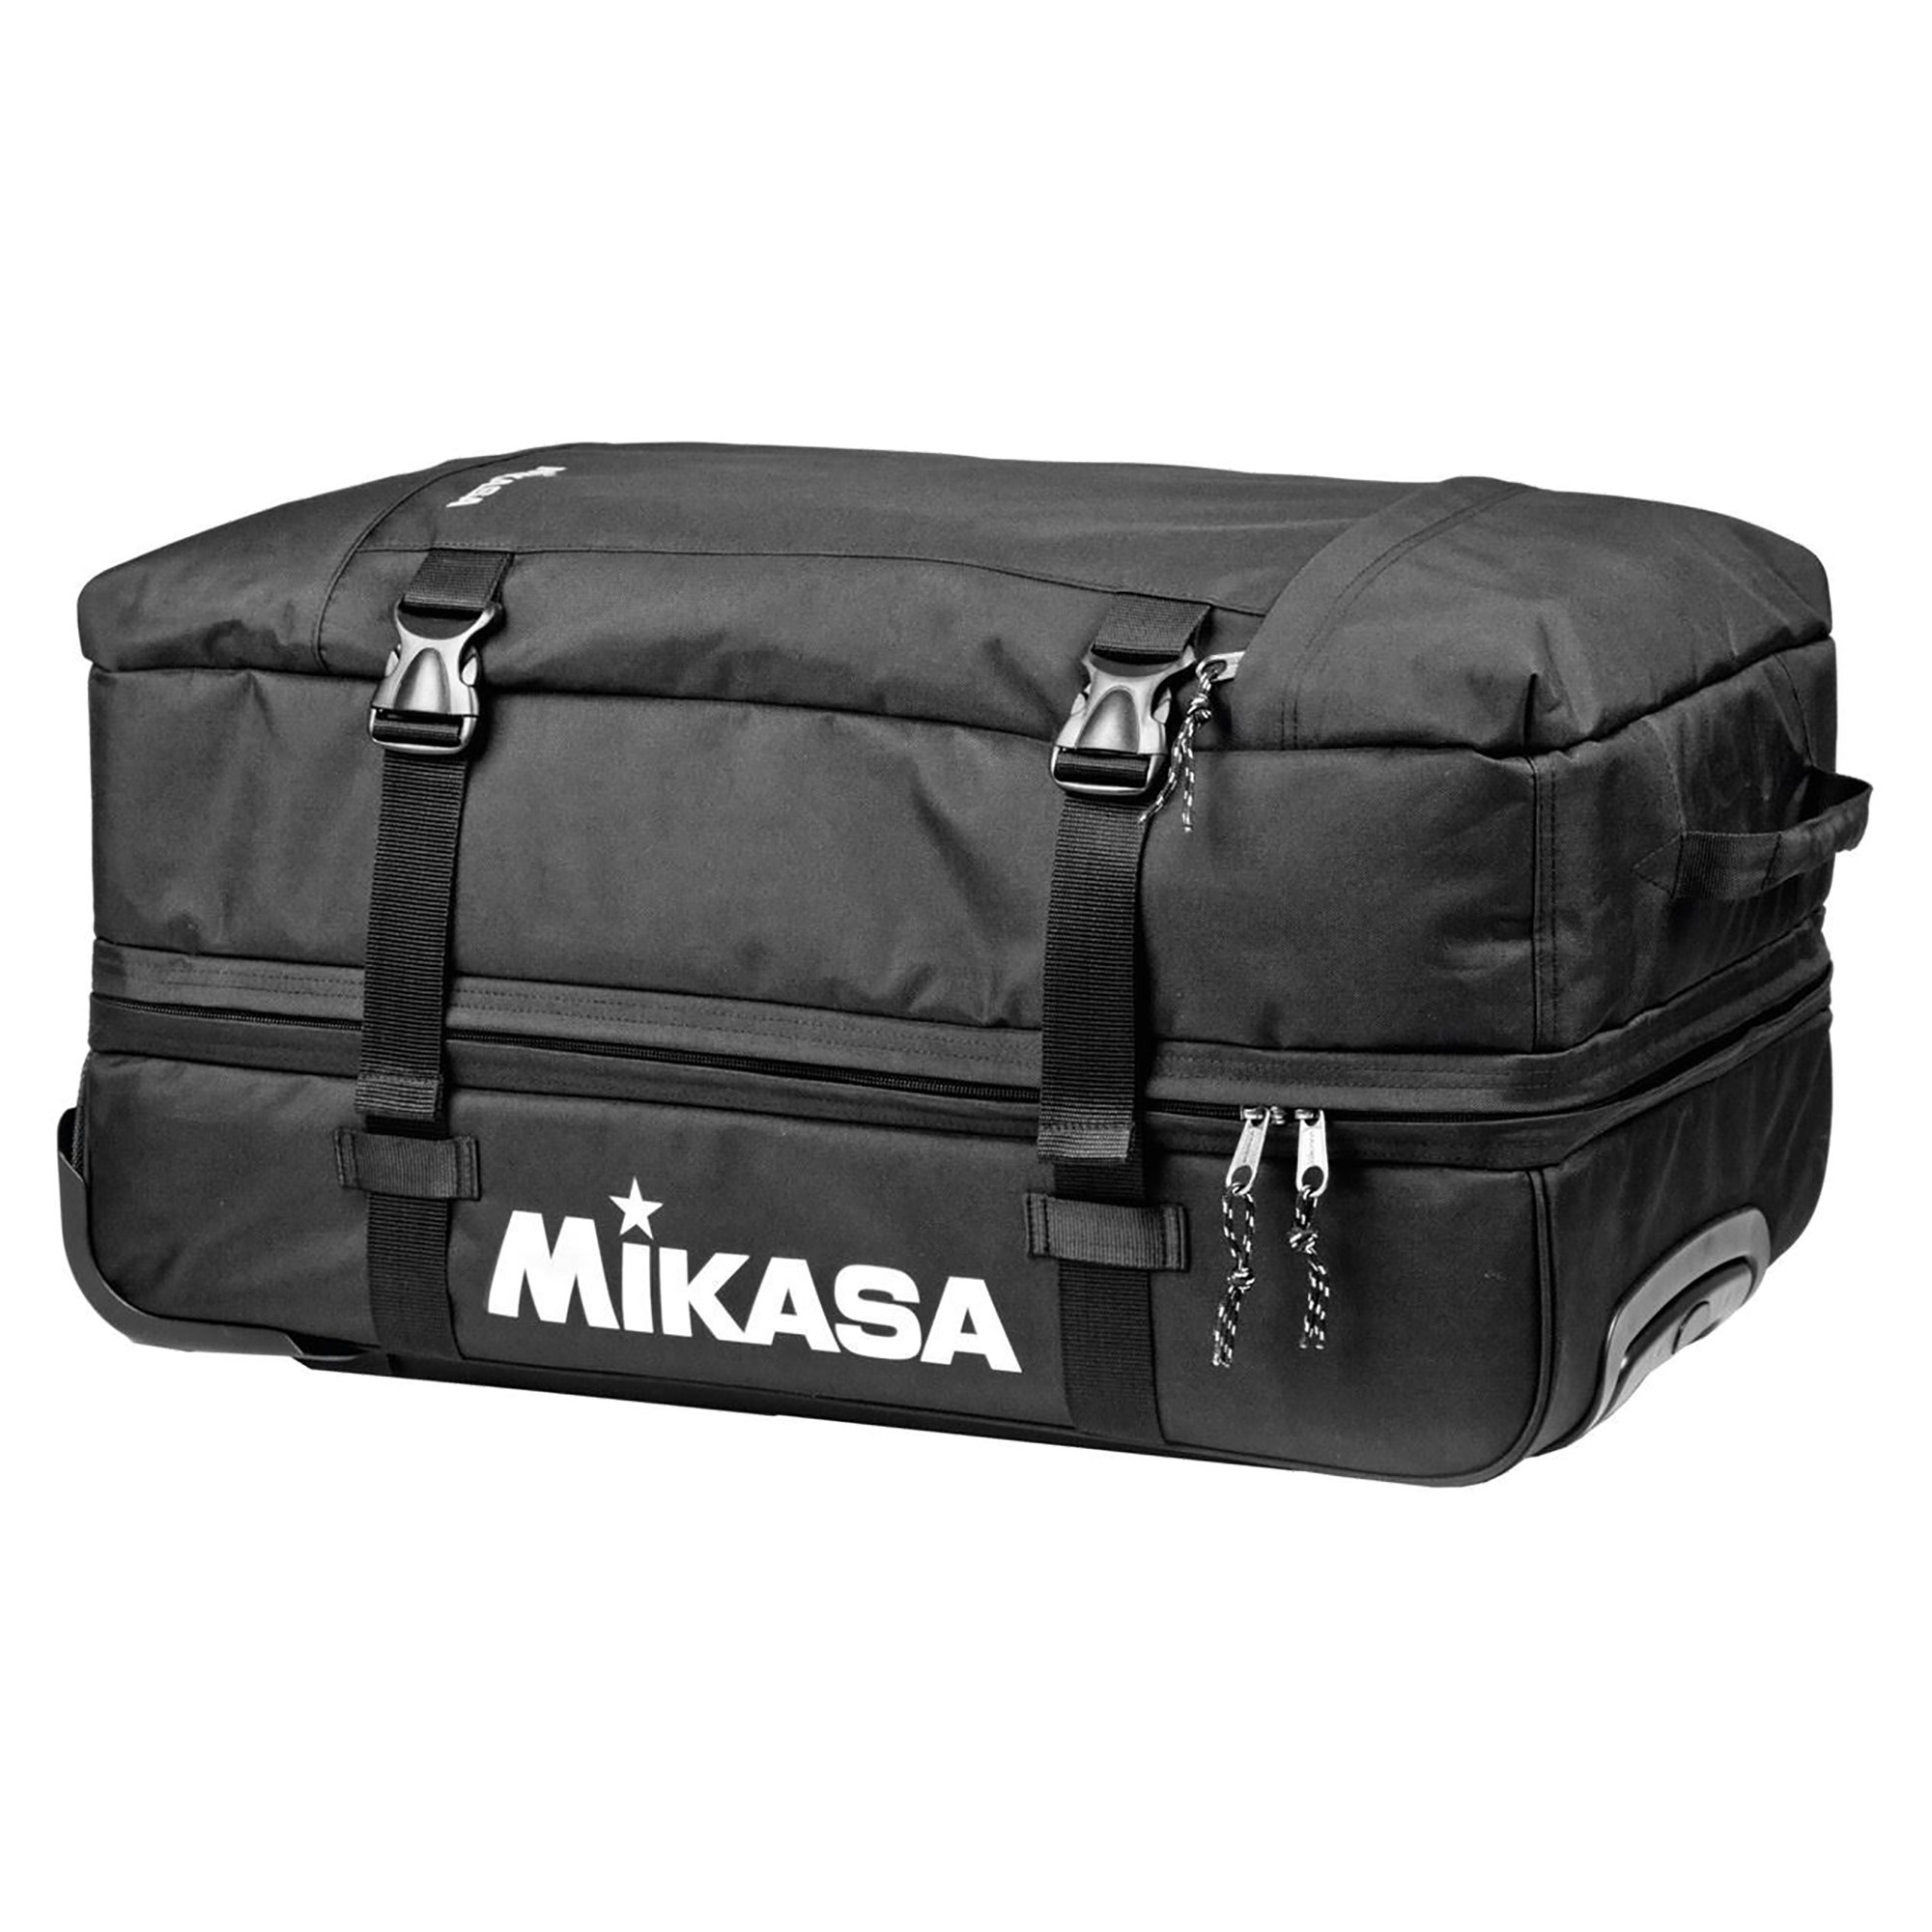 Mikasa Trolley Bag